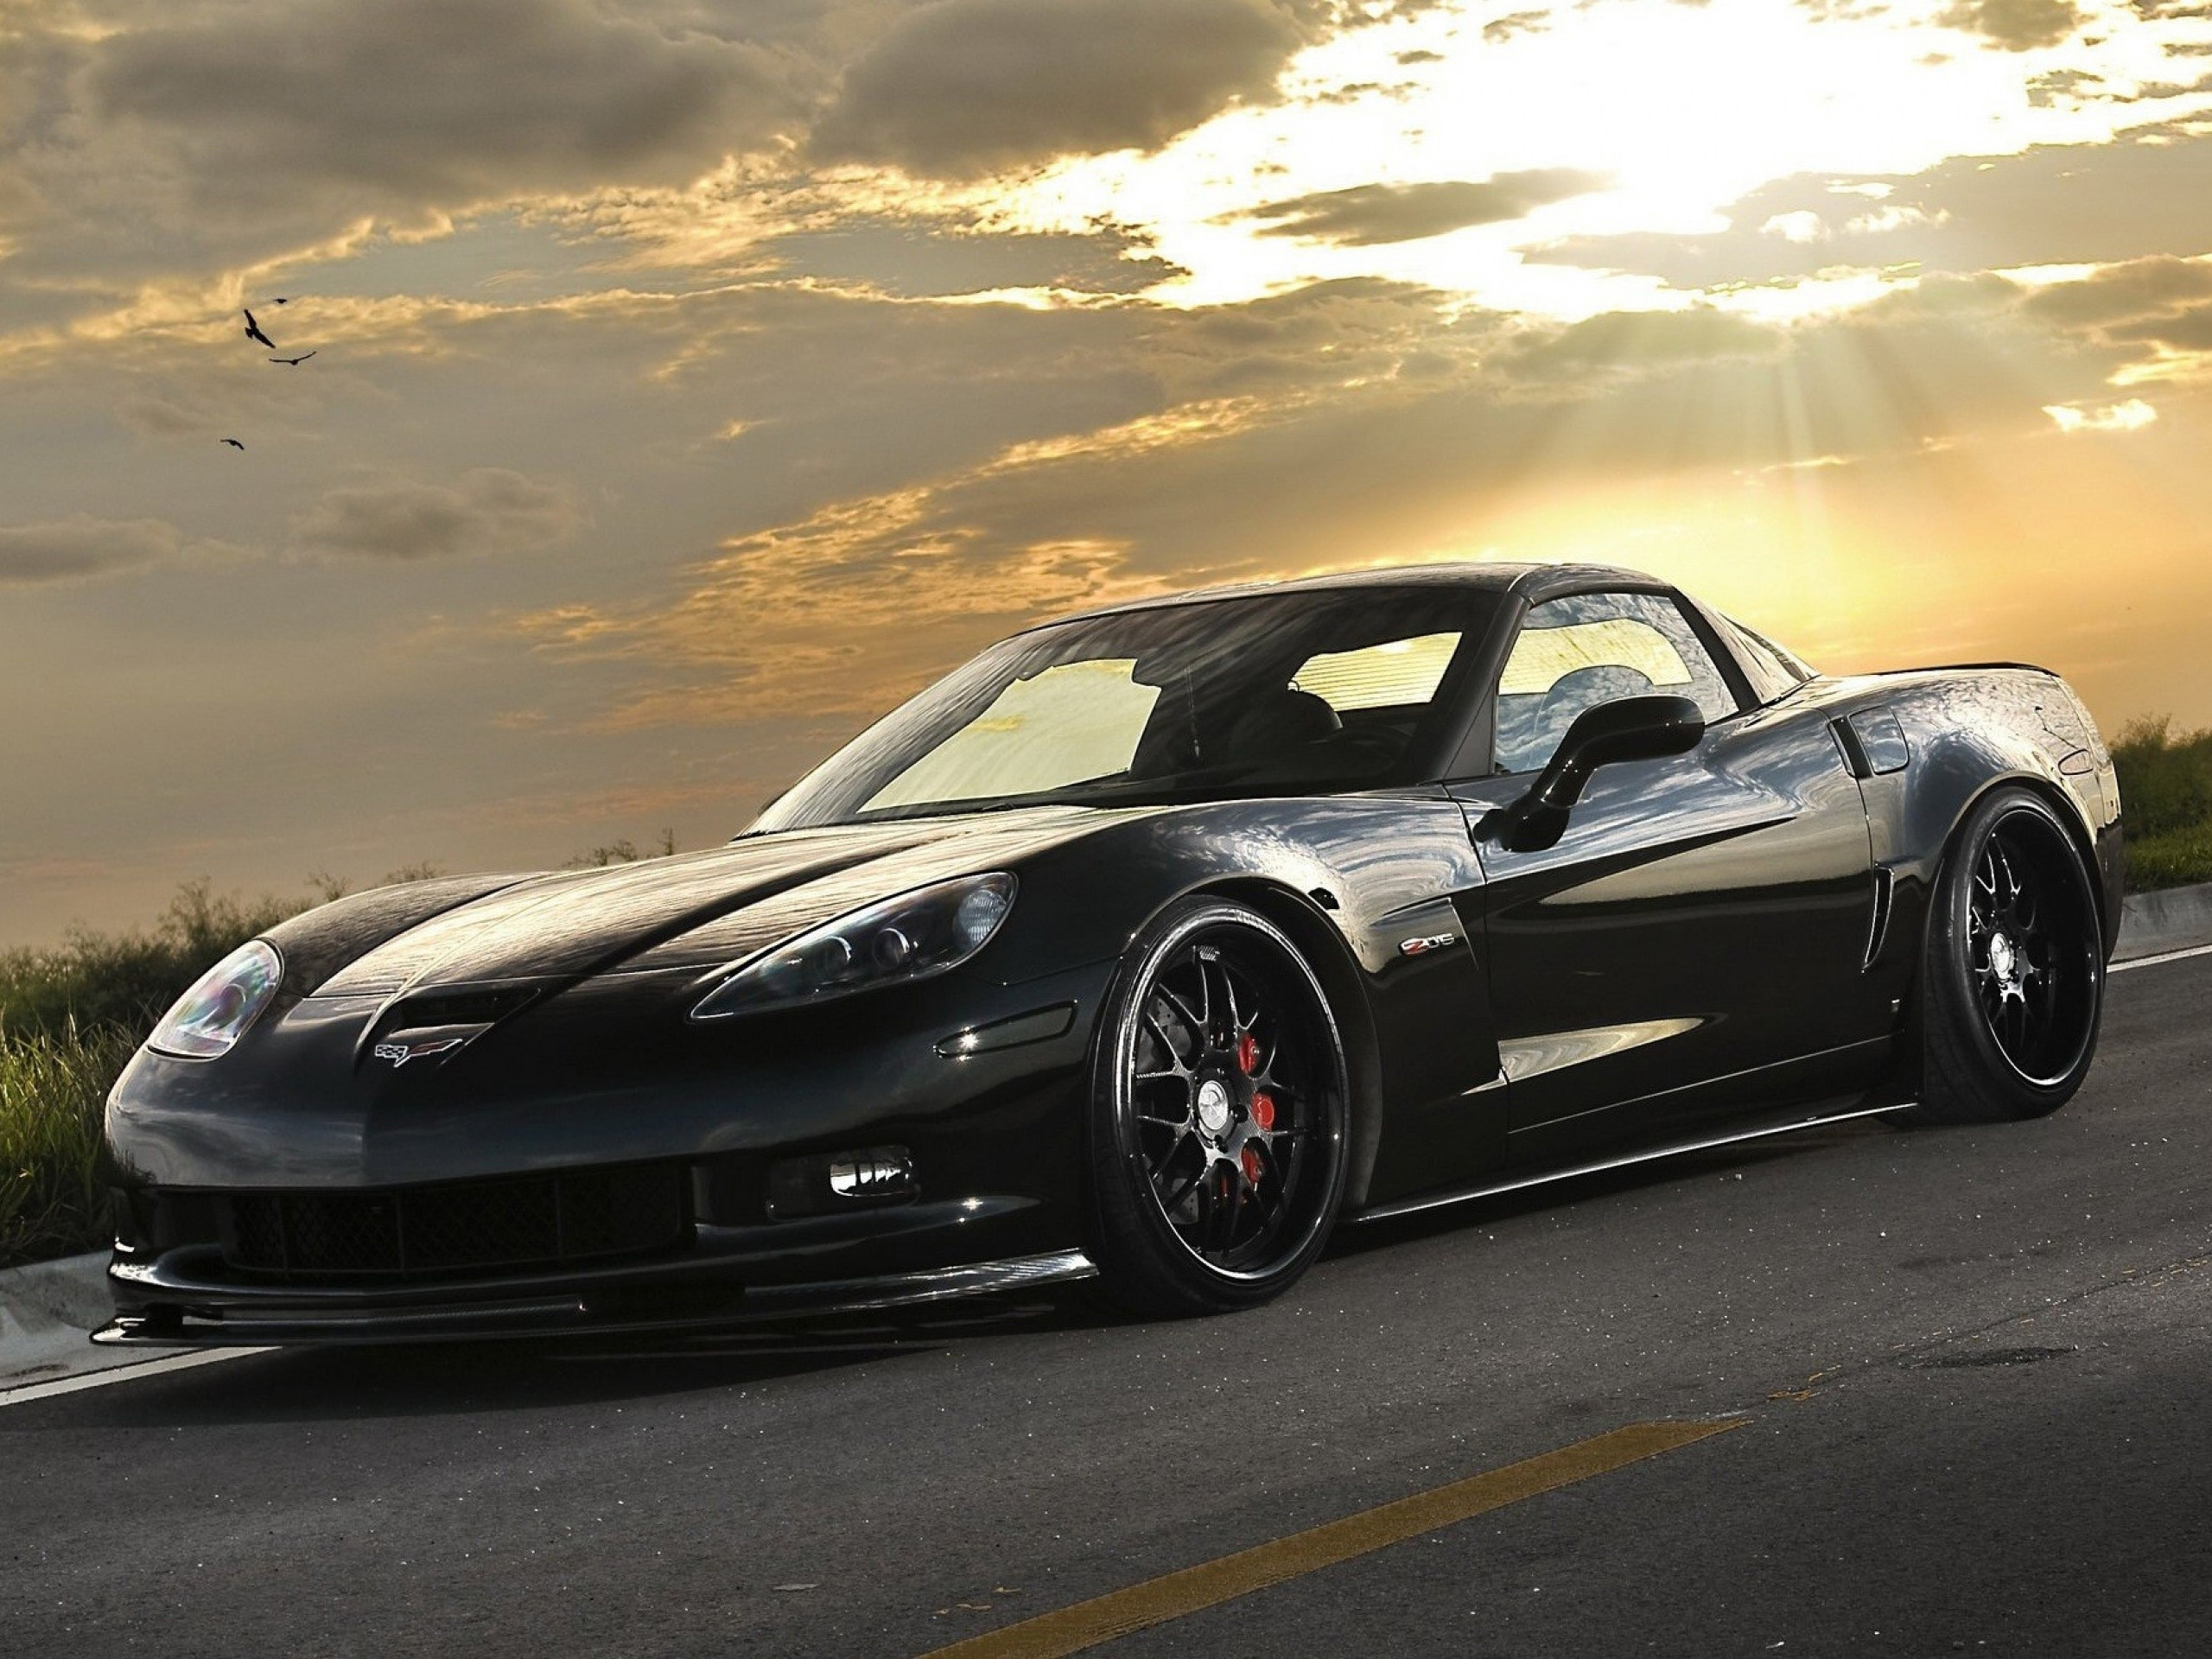 Corvette: The sixth generation of a popular American sports car, Black ZR1 C6 model. 2560x1920 HD Wallpaper.